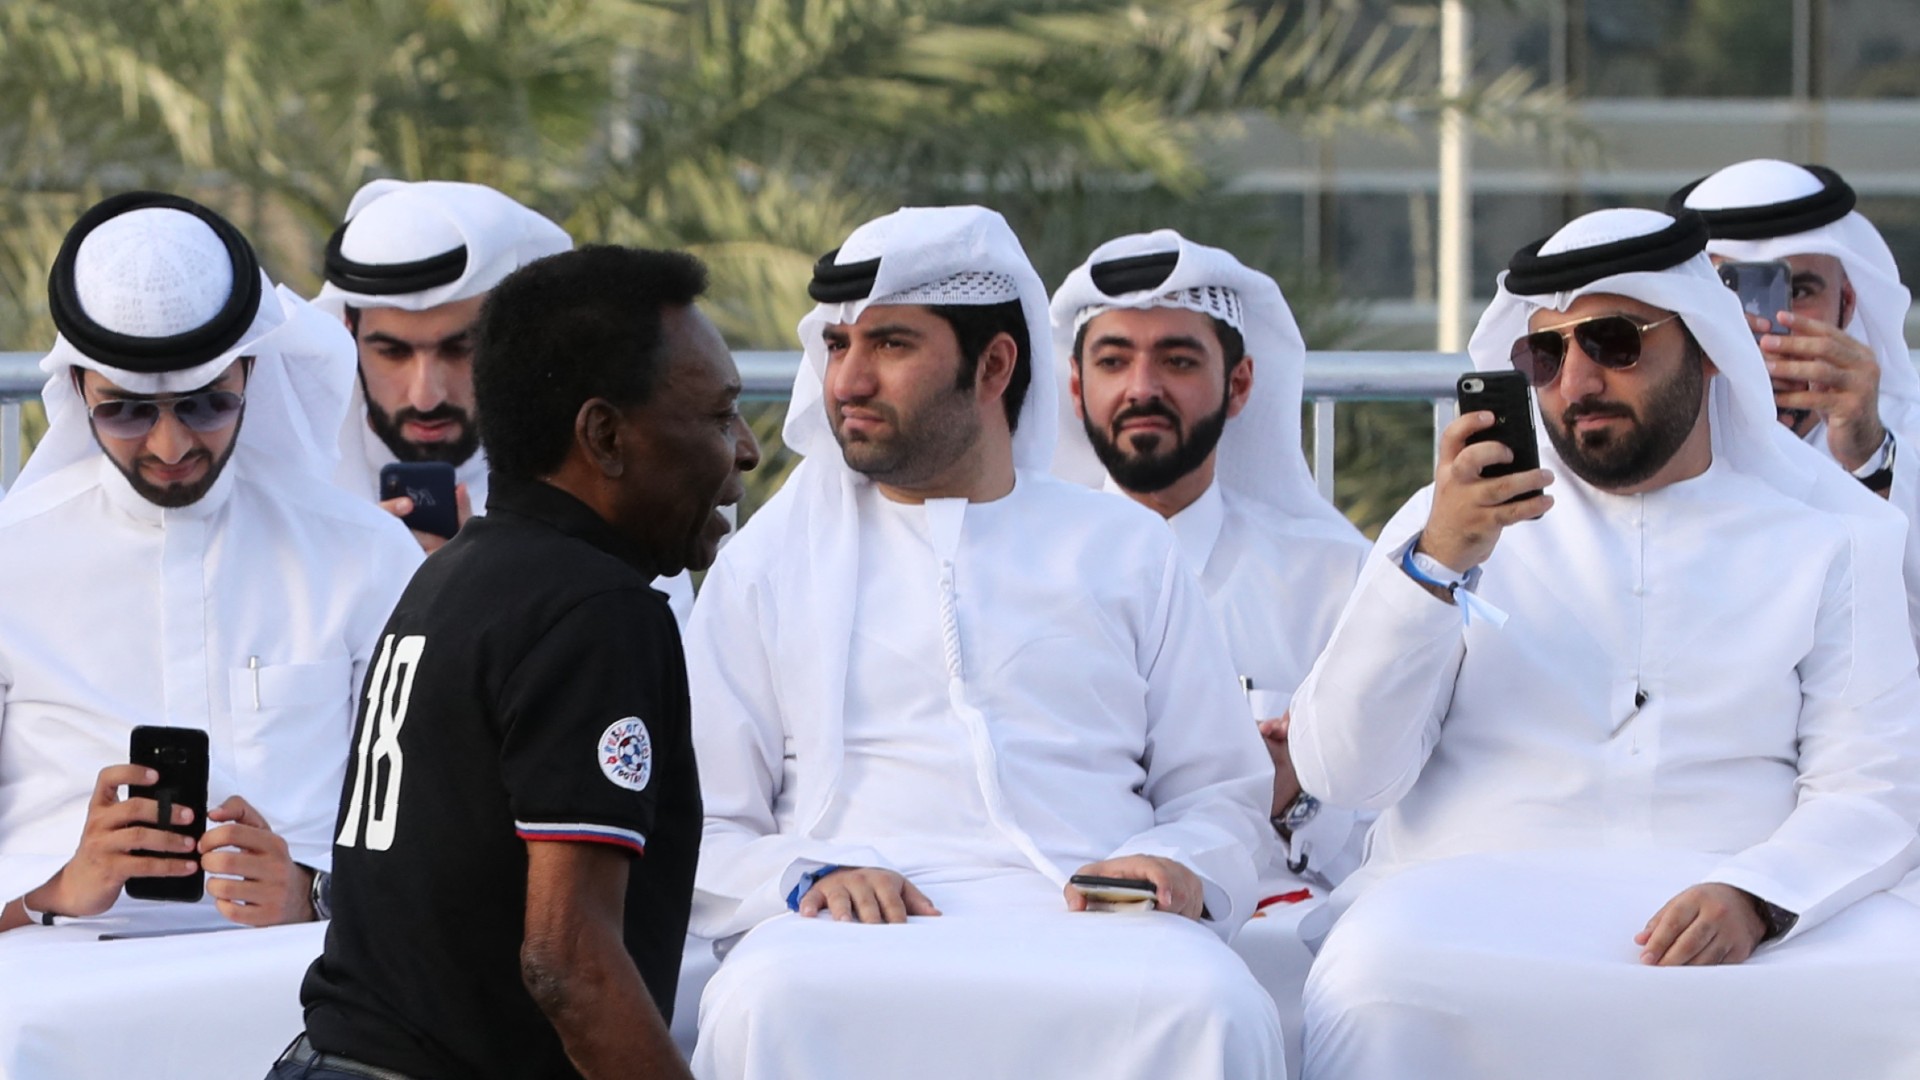 Brazilian football legend Pele arrives at the Dubai Opera gardens to attend a friendly football game in Dubai on 15 April 2018 (AFP)